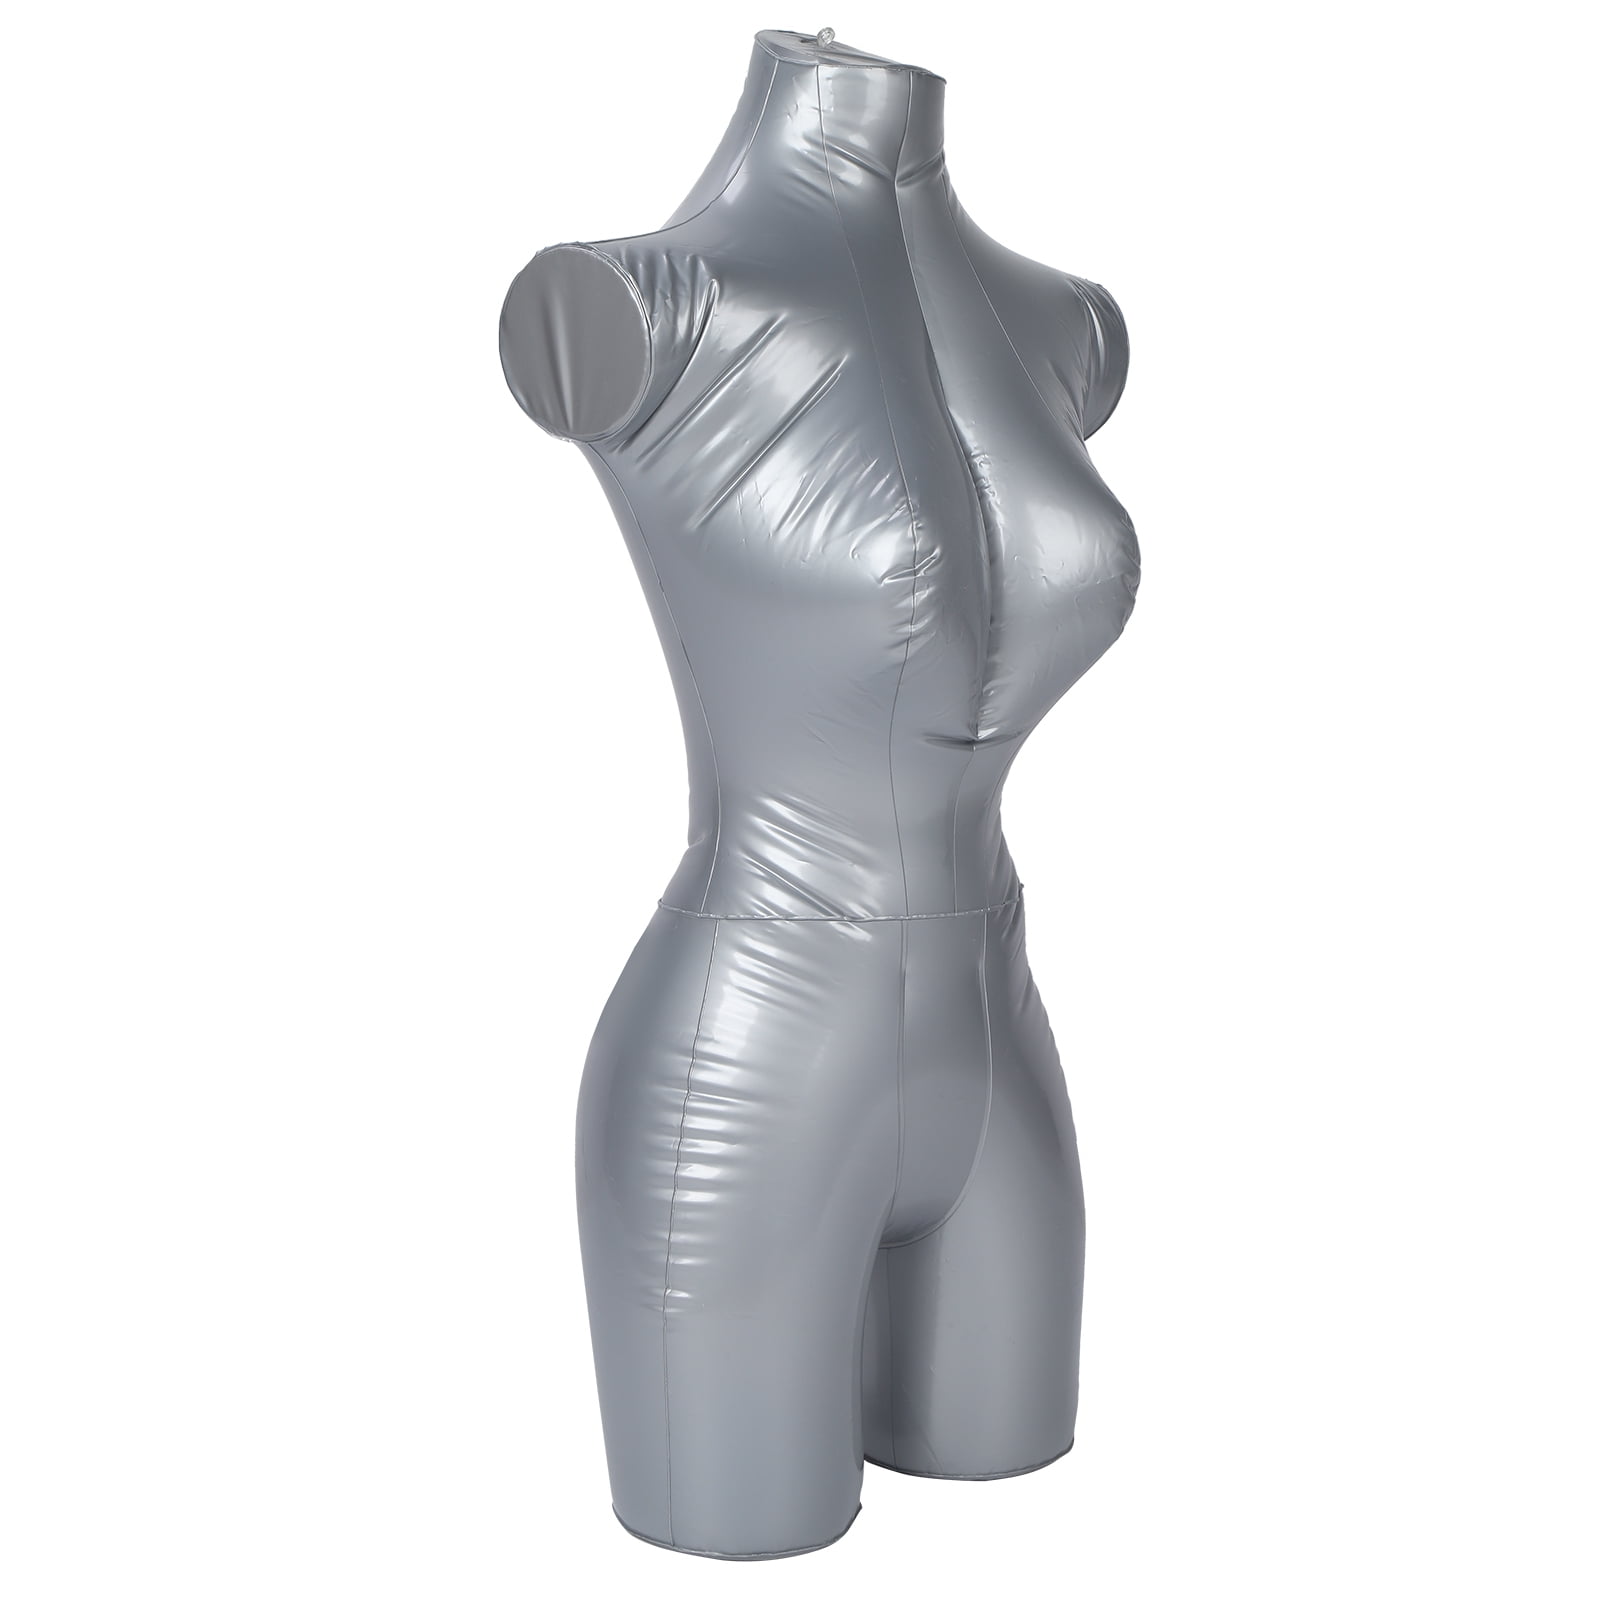 1x Woman Female Half Body W/ Arm Inflatable Mannequin Dummy Torso Model Fashion 